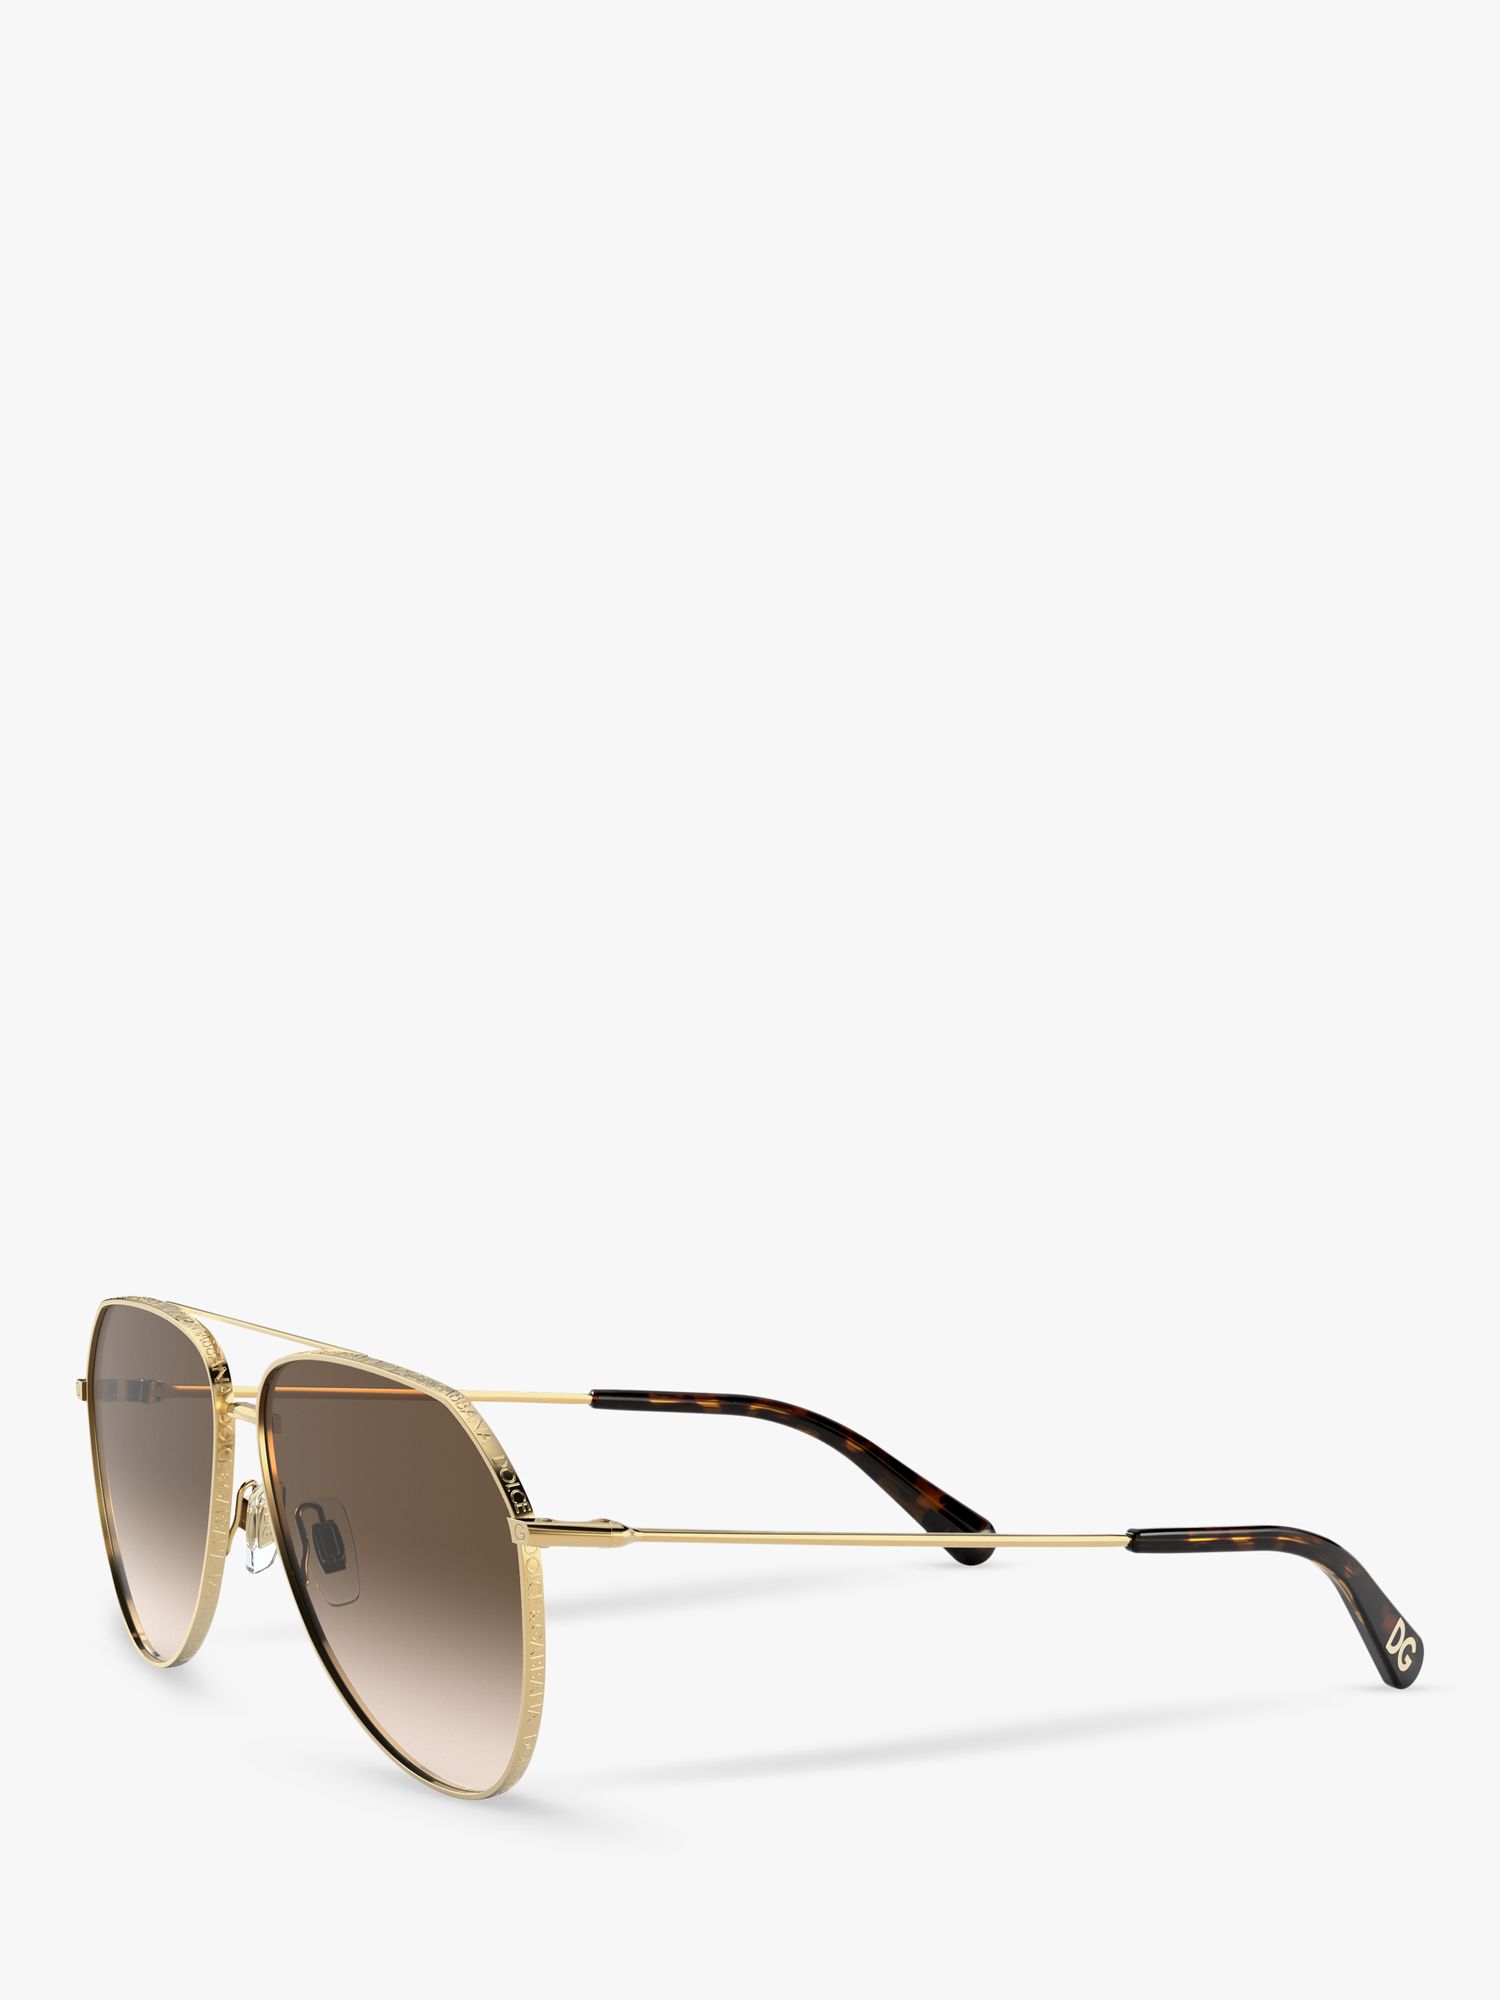 Dolce & Gabbana DG2244 Women's Aviator Sunglasses, Gold/Brown Gradient